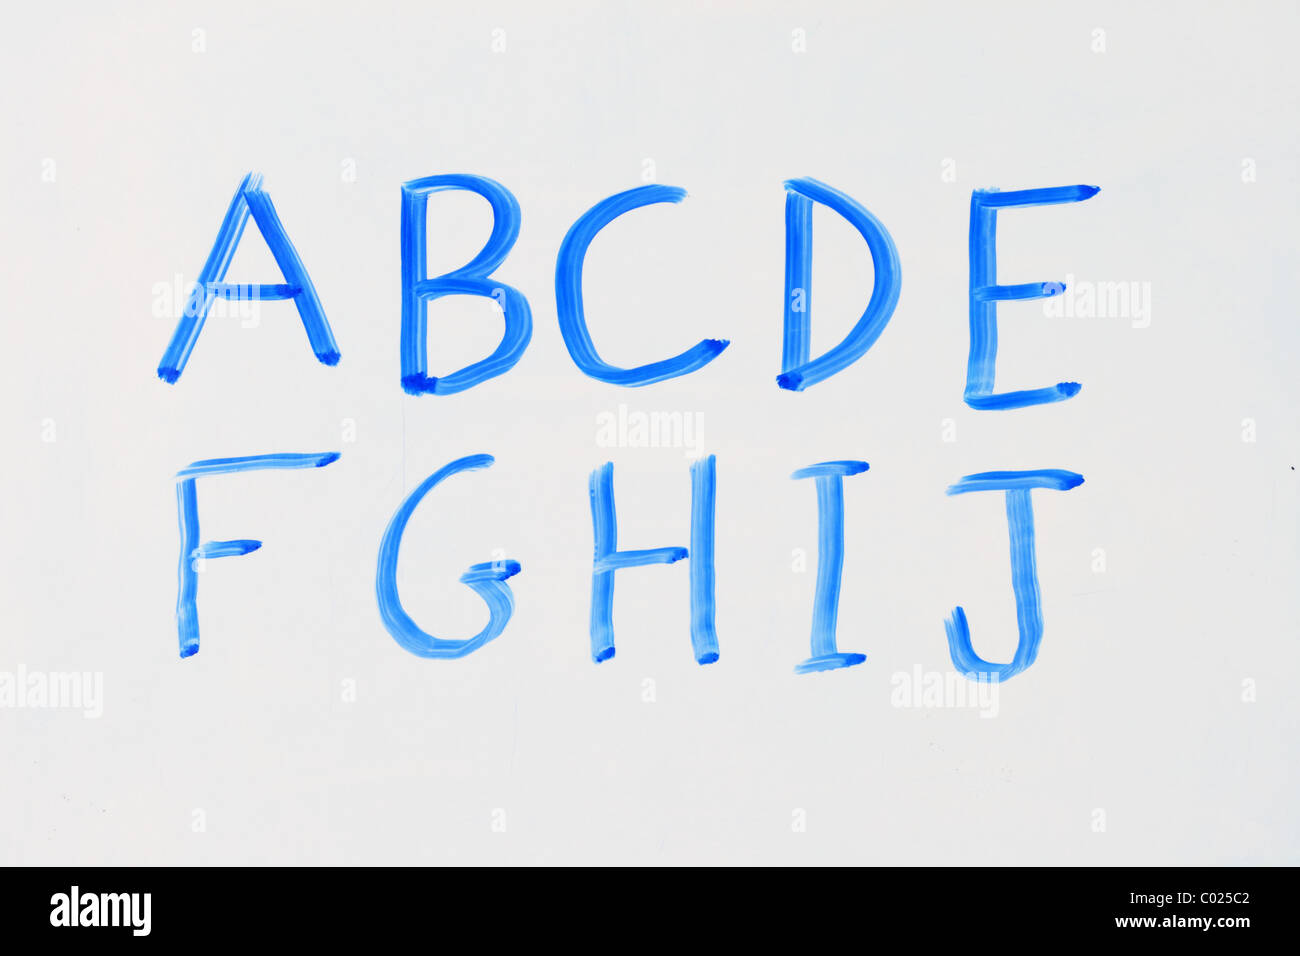 the letters A B C D E F G H I J in blue marker on a dry erase white board Stock Photo